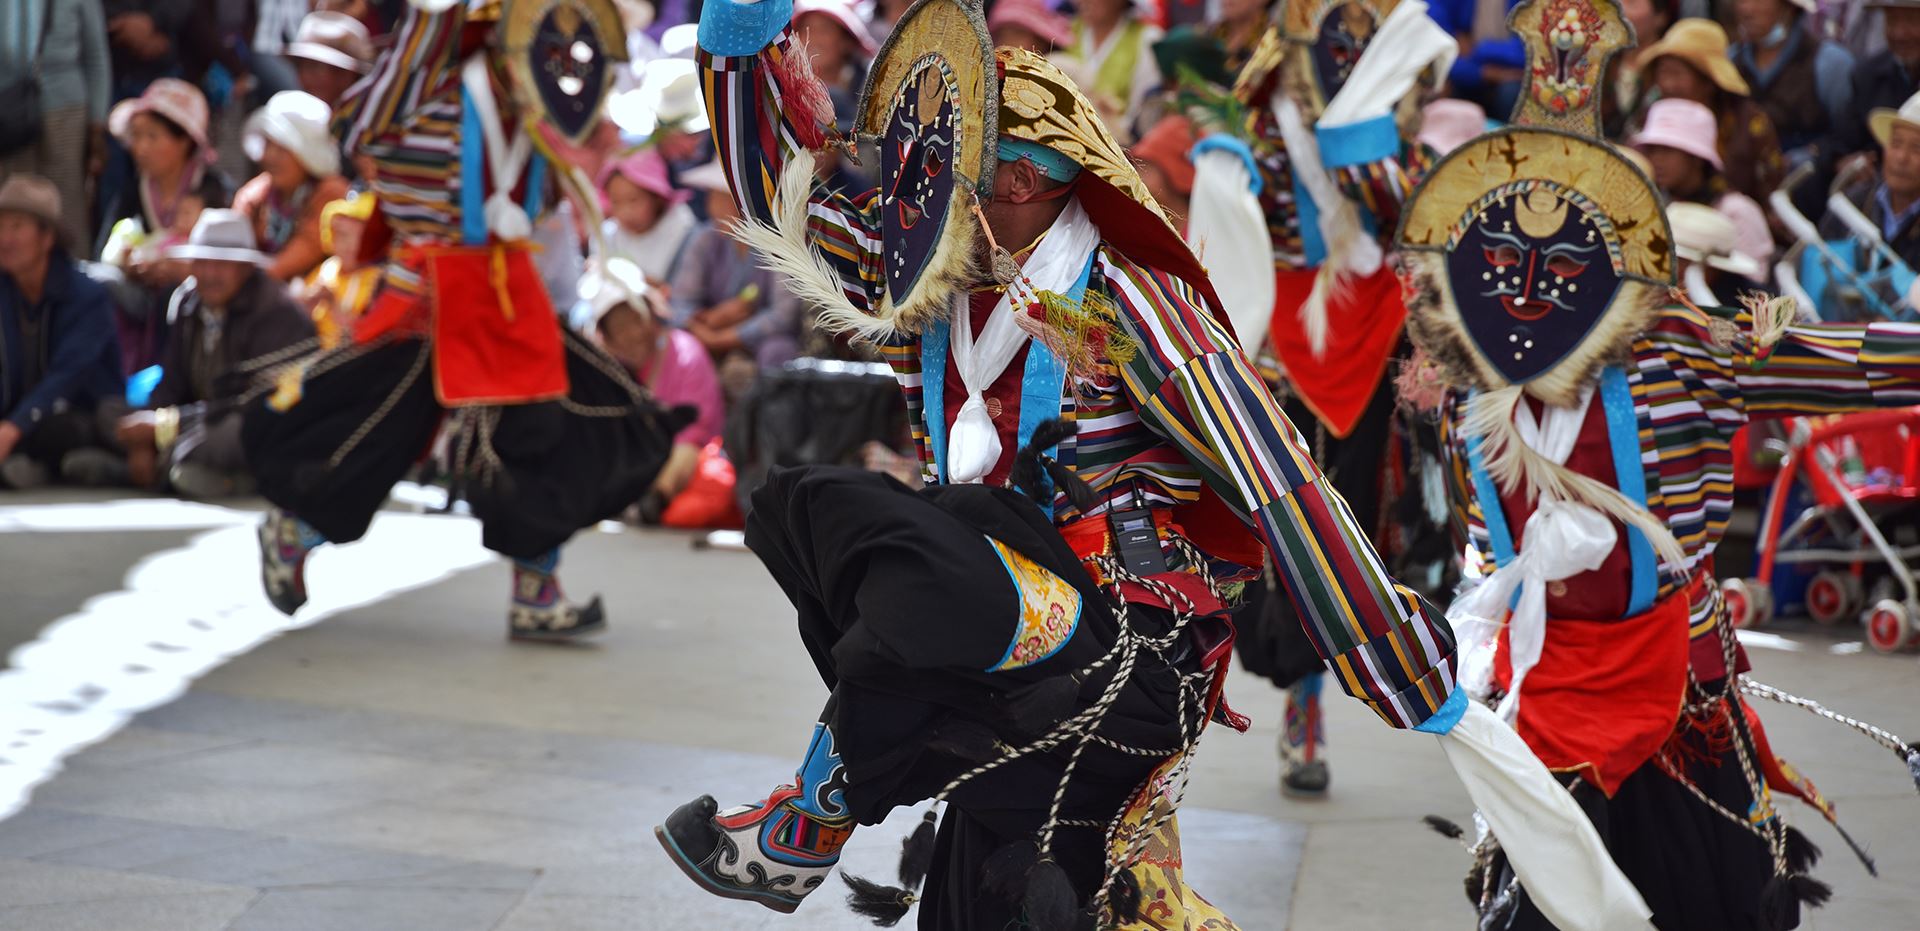 Tibet Tour during Shoton Festival in Lhasa 2020